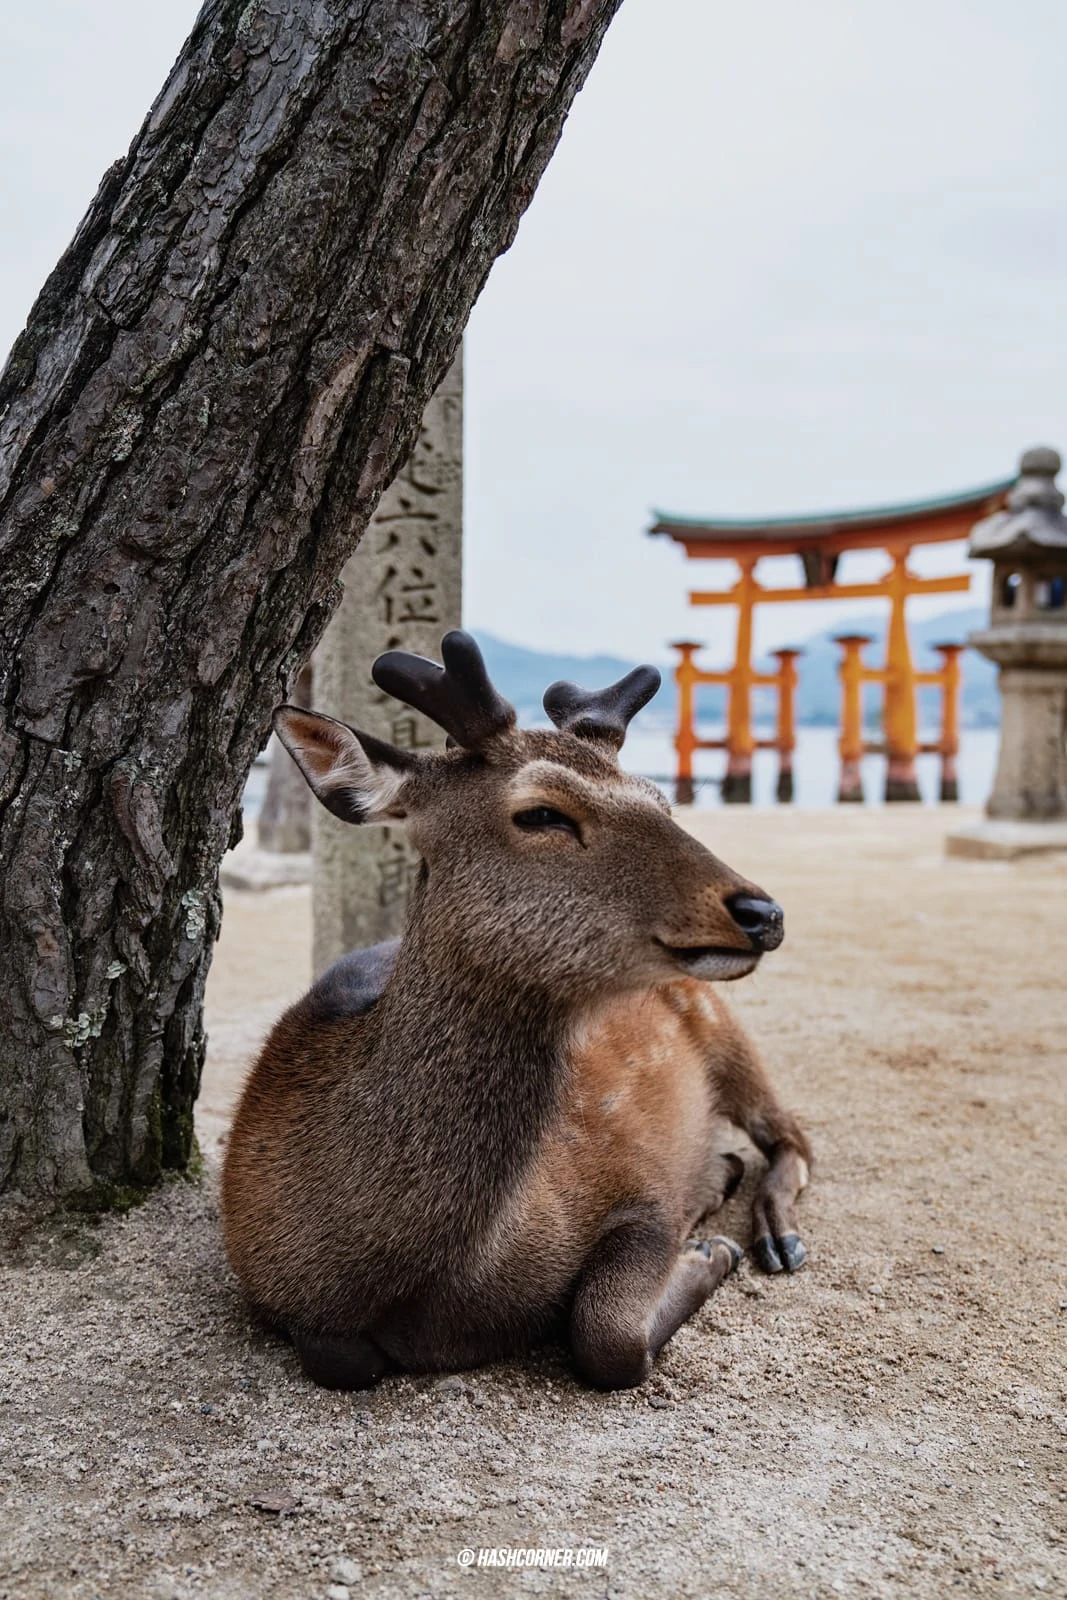 Miyajima Island Travel Review: Discovering The Iconic Torii Gate of Sacred Island